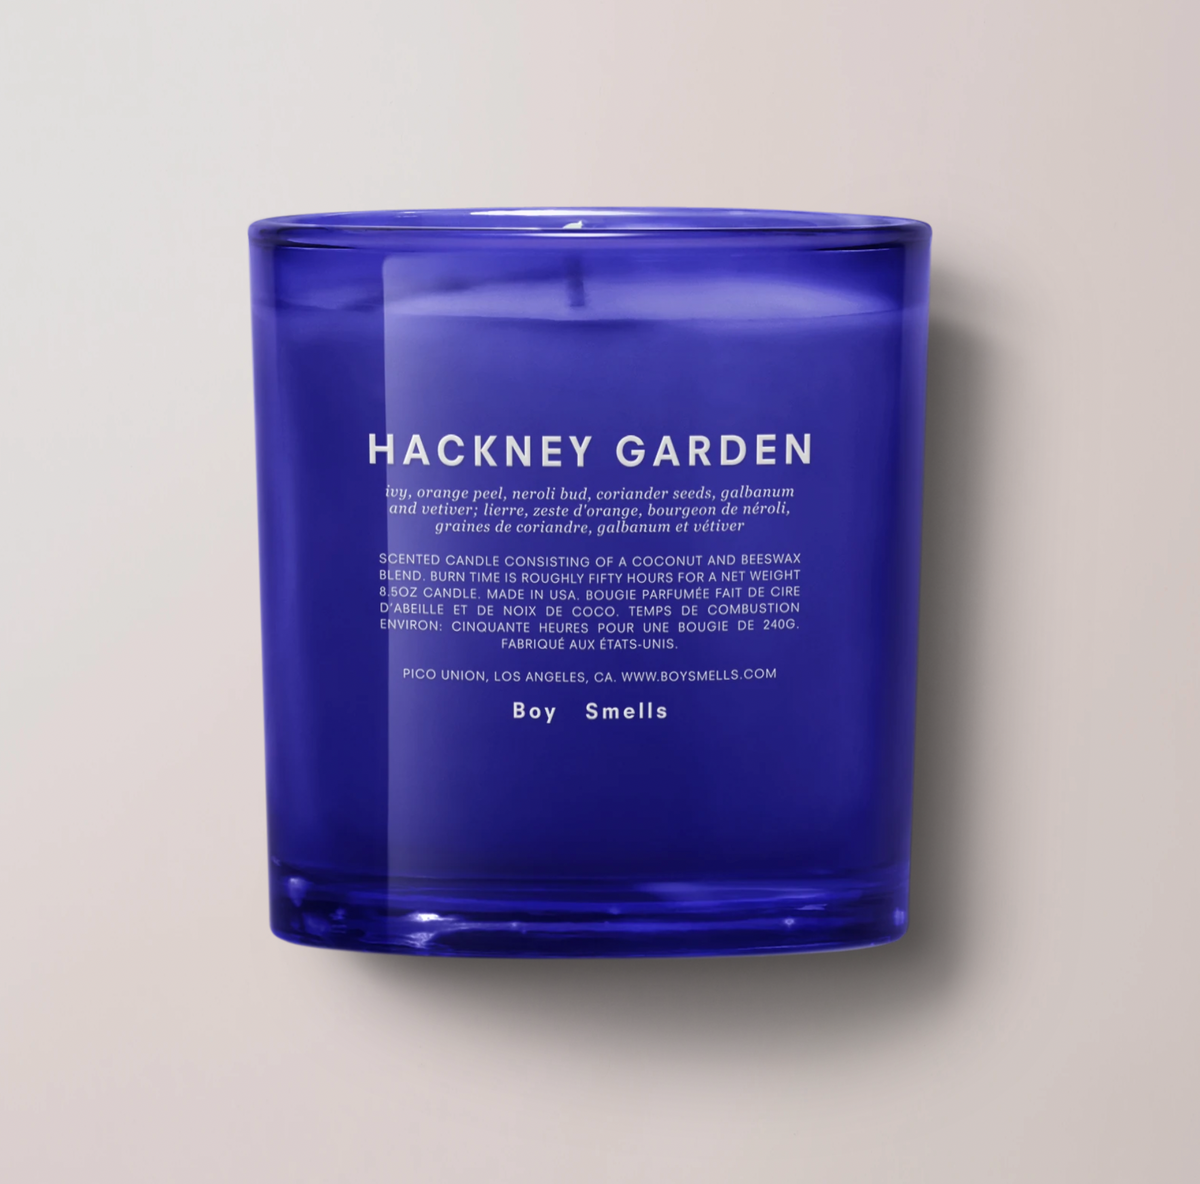 Hackney Garden